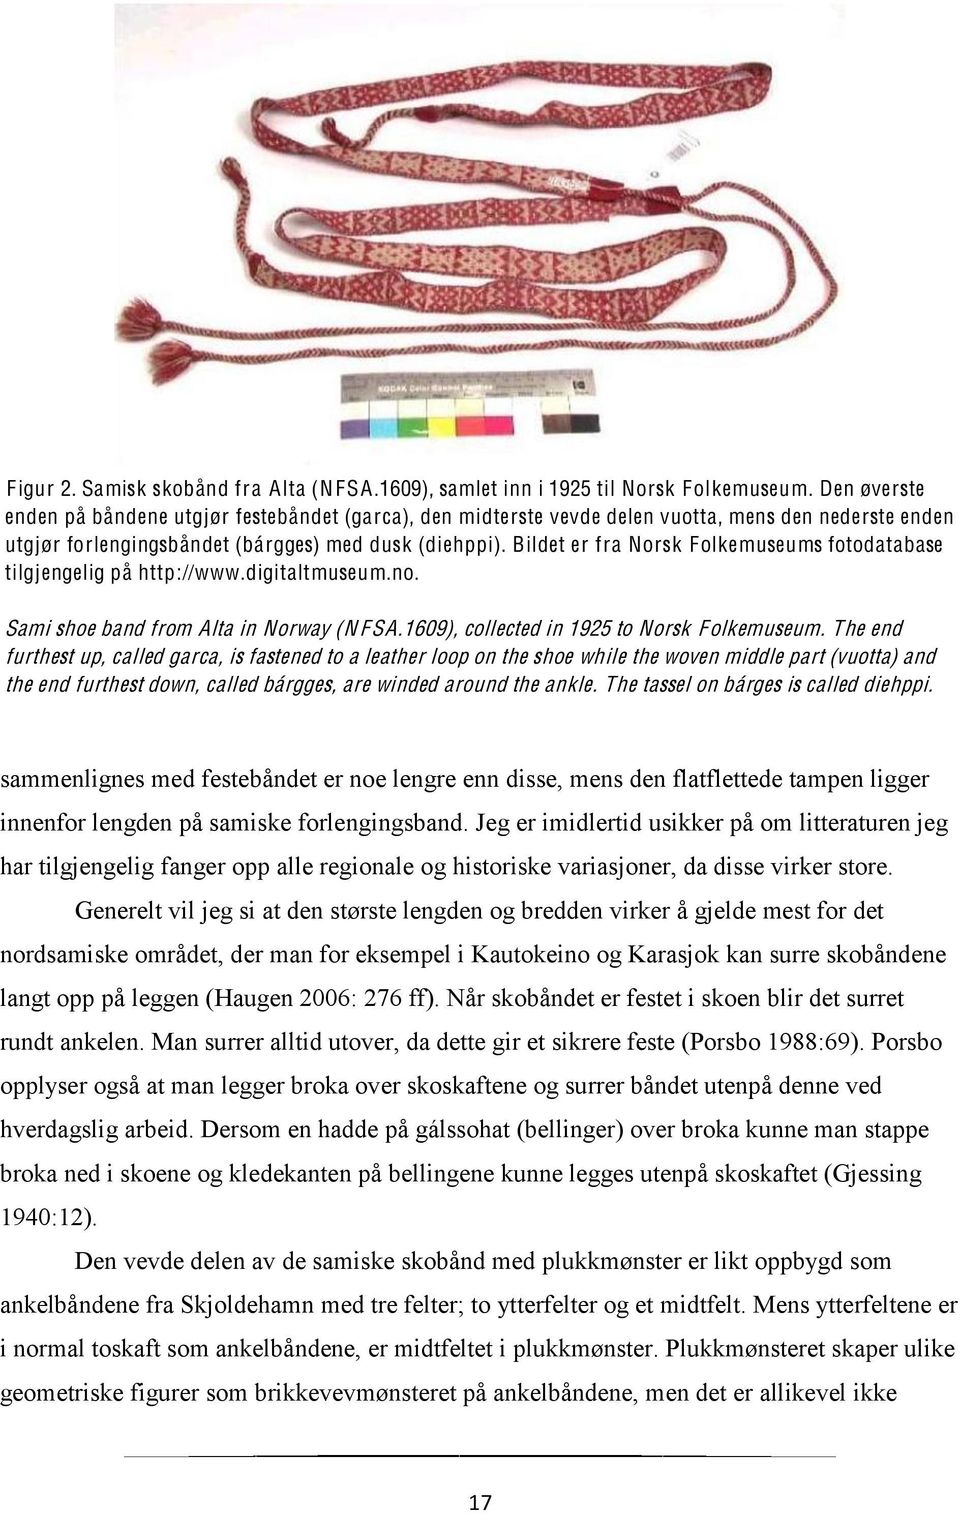 Bildet er fra Norsk Folkemuseums fotodatabase tilgjengelig på http://www.digitaltmuseum.no. Sami shoe band from Alta in Norway (N FSA.1609), collected in 1925 to Norsk Folkemuseum.